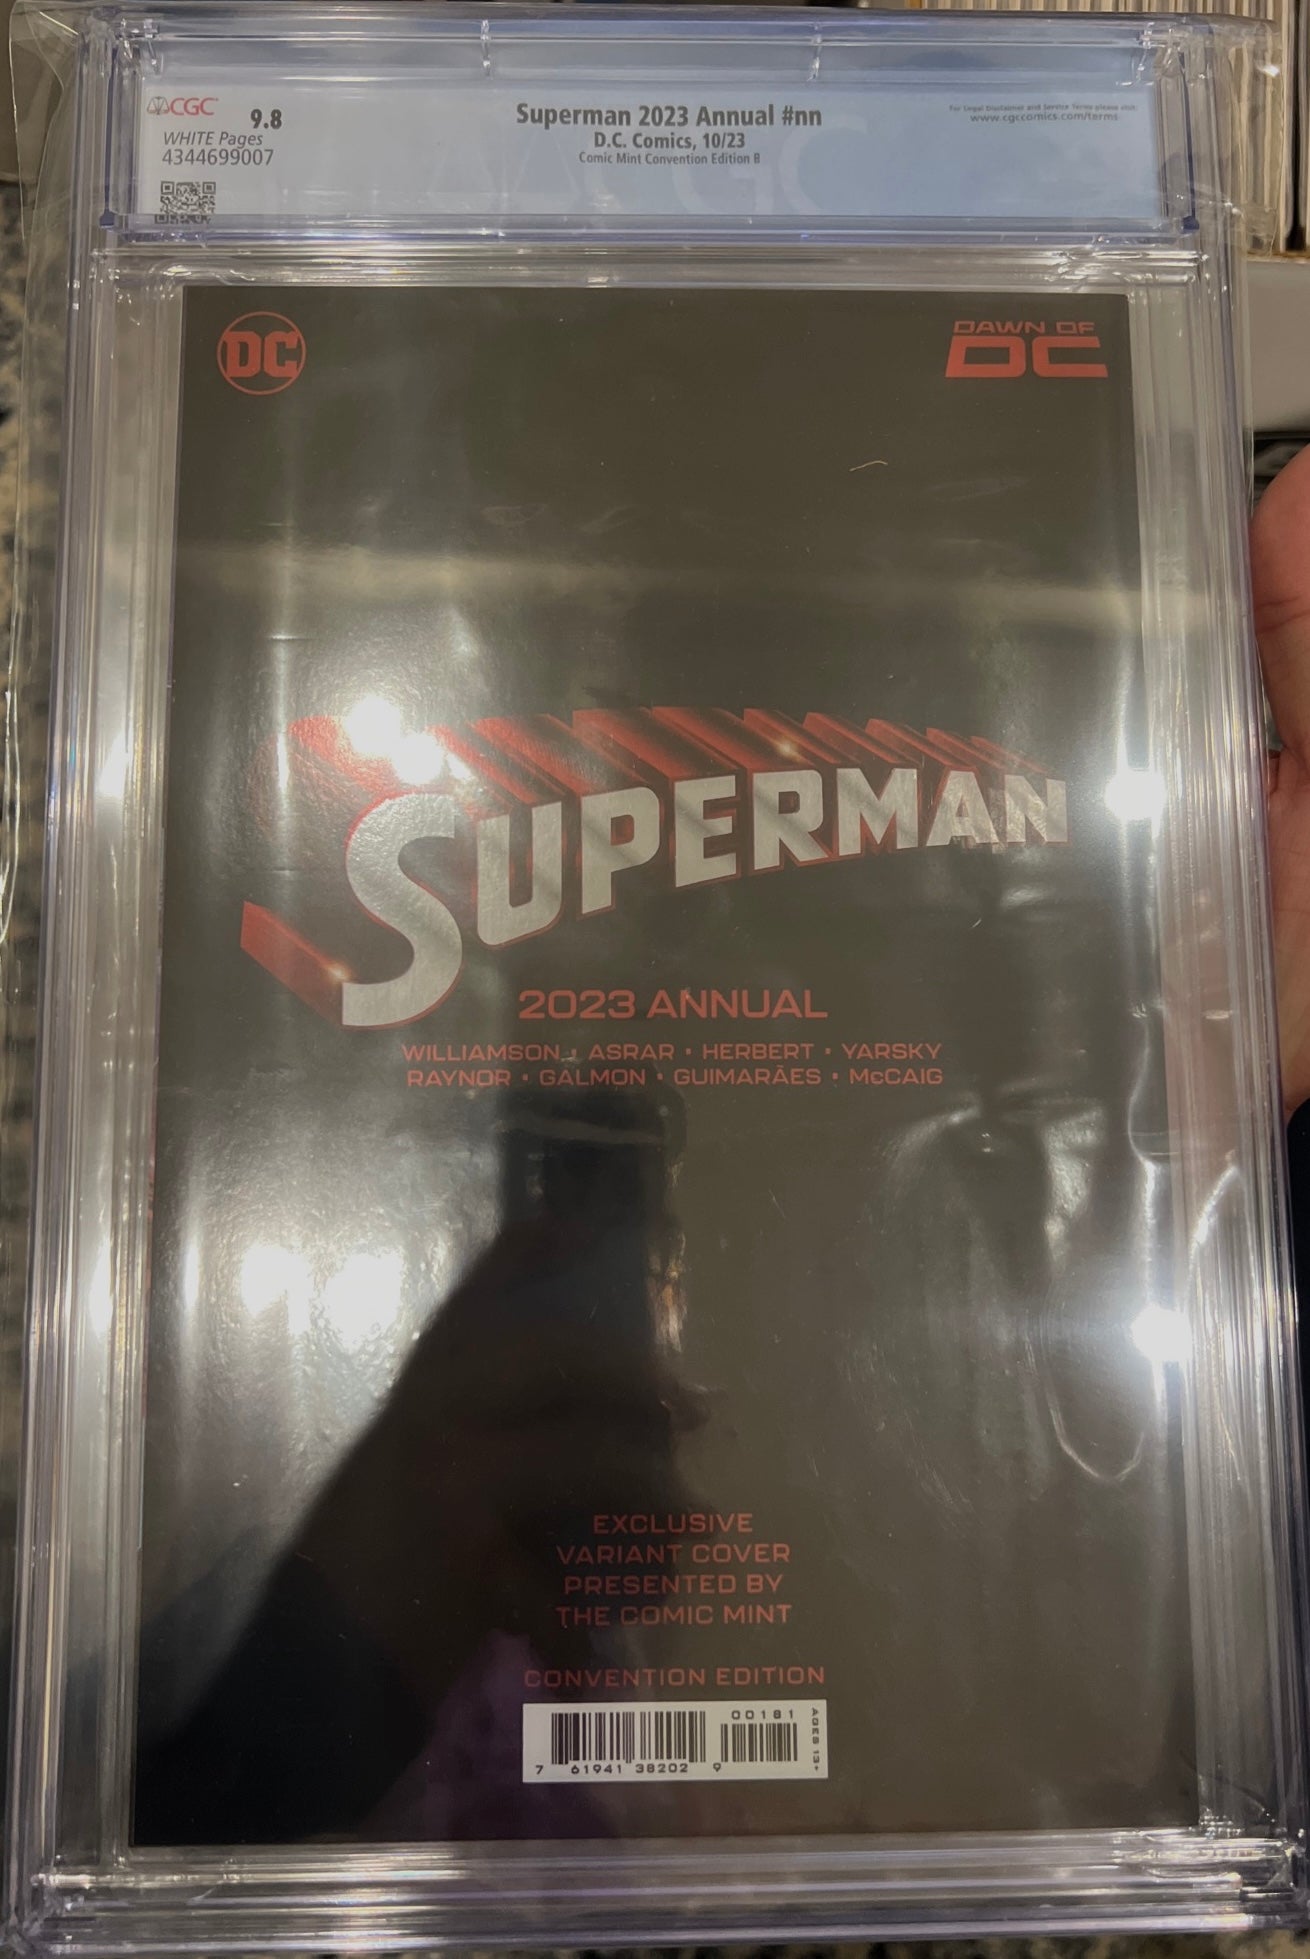 Superman 2023 Annual #nn CGC 9.8 (NYCC Comic Mint Foil Edition) DC Comics